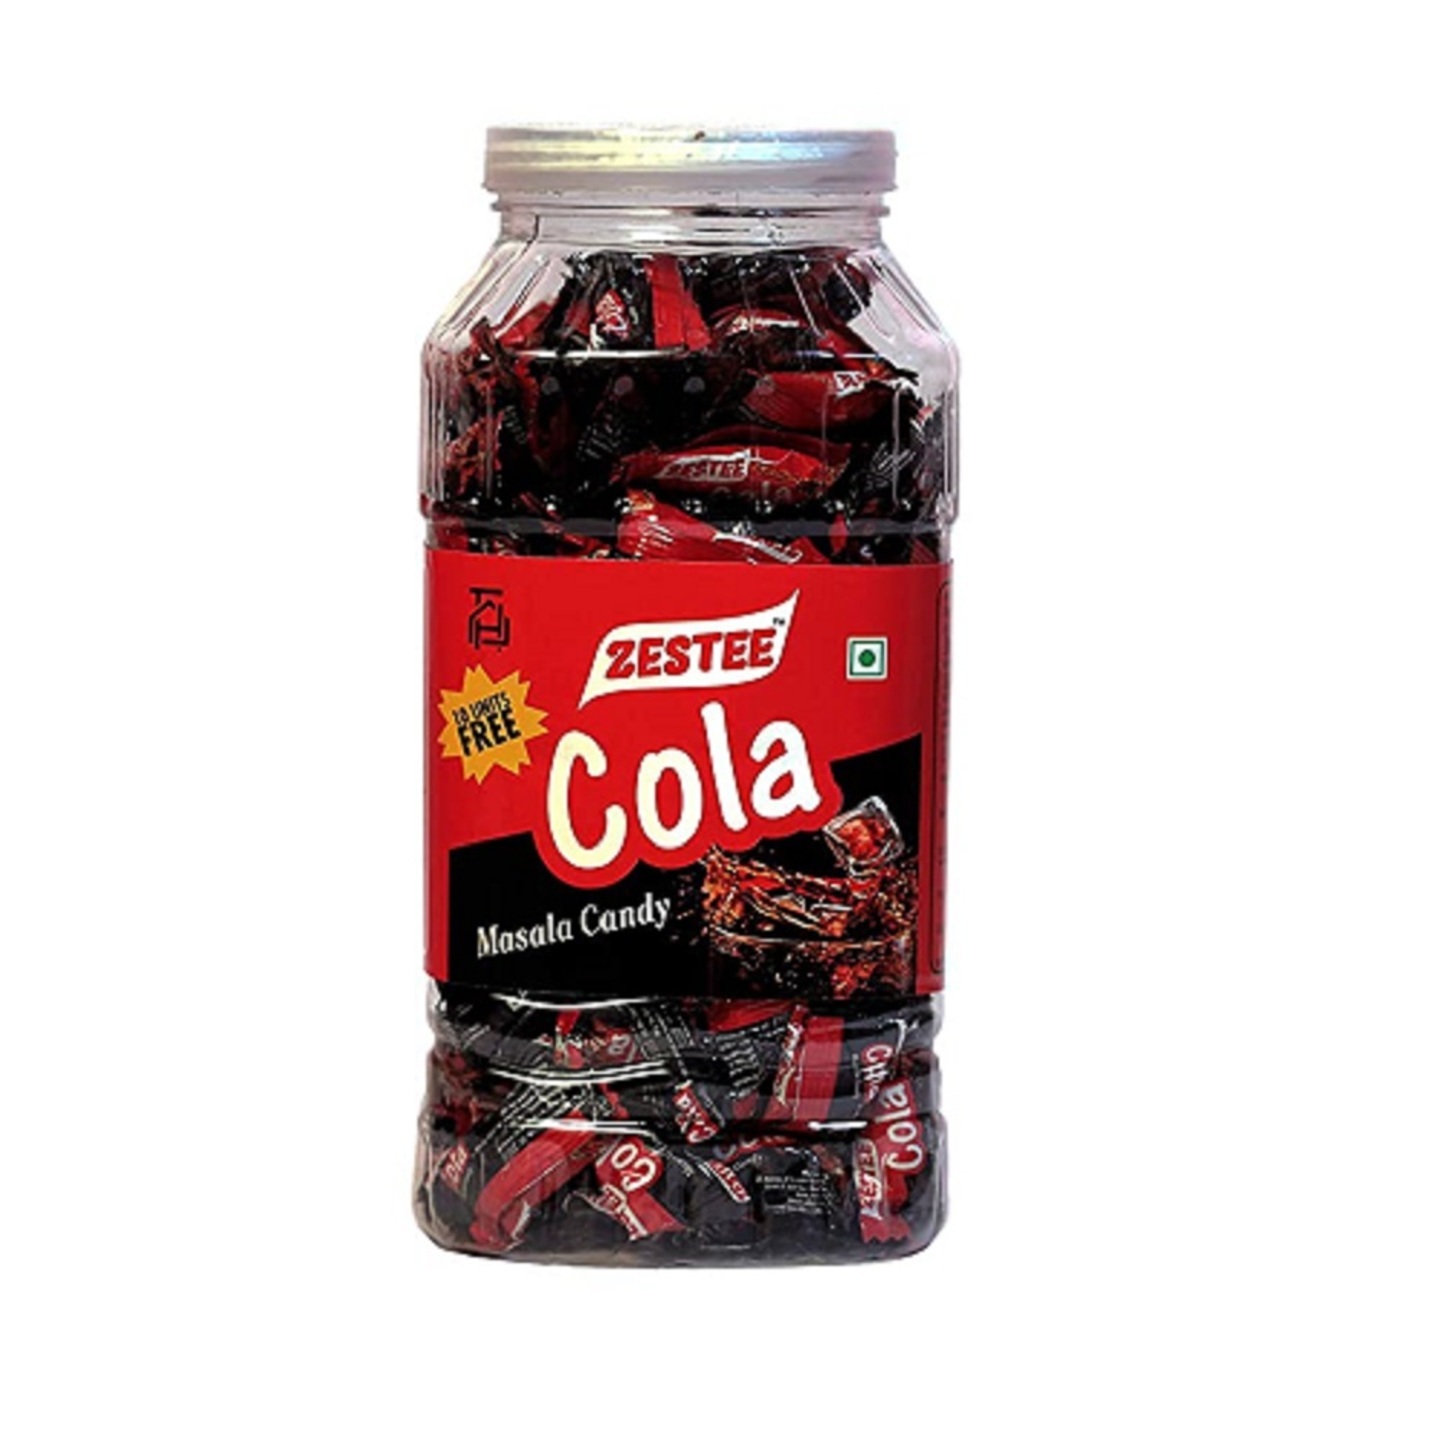 ZESTEE Masala Candy Cola Jar Mouthwatering Taste - Pack Of 1